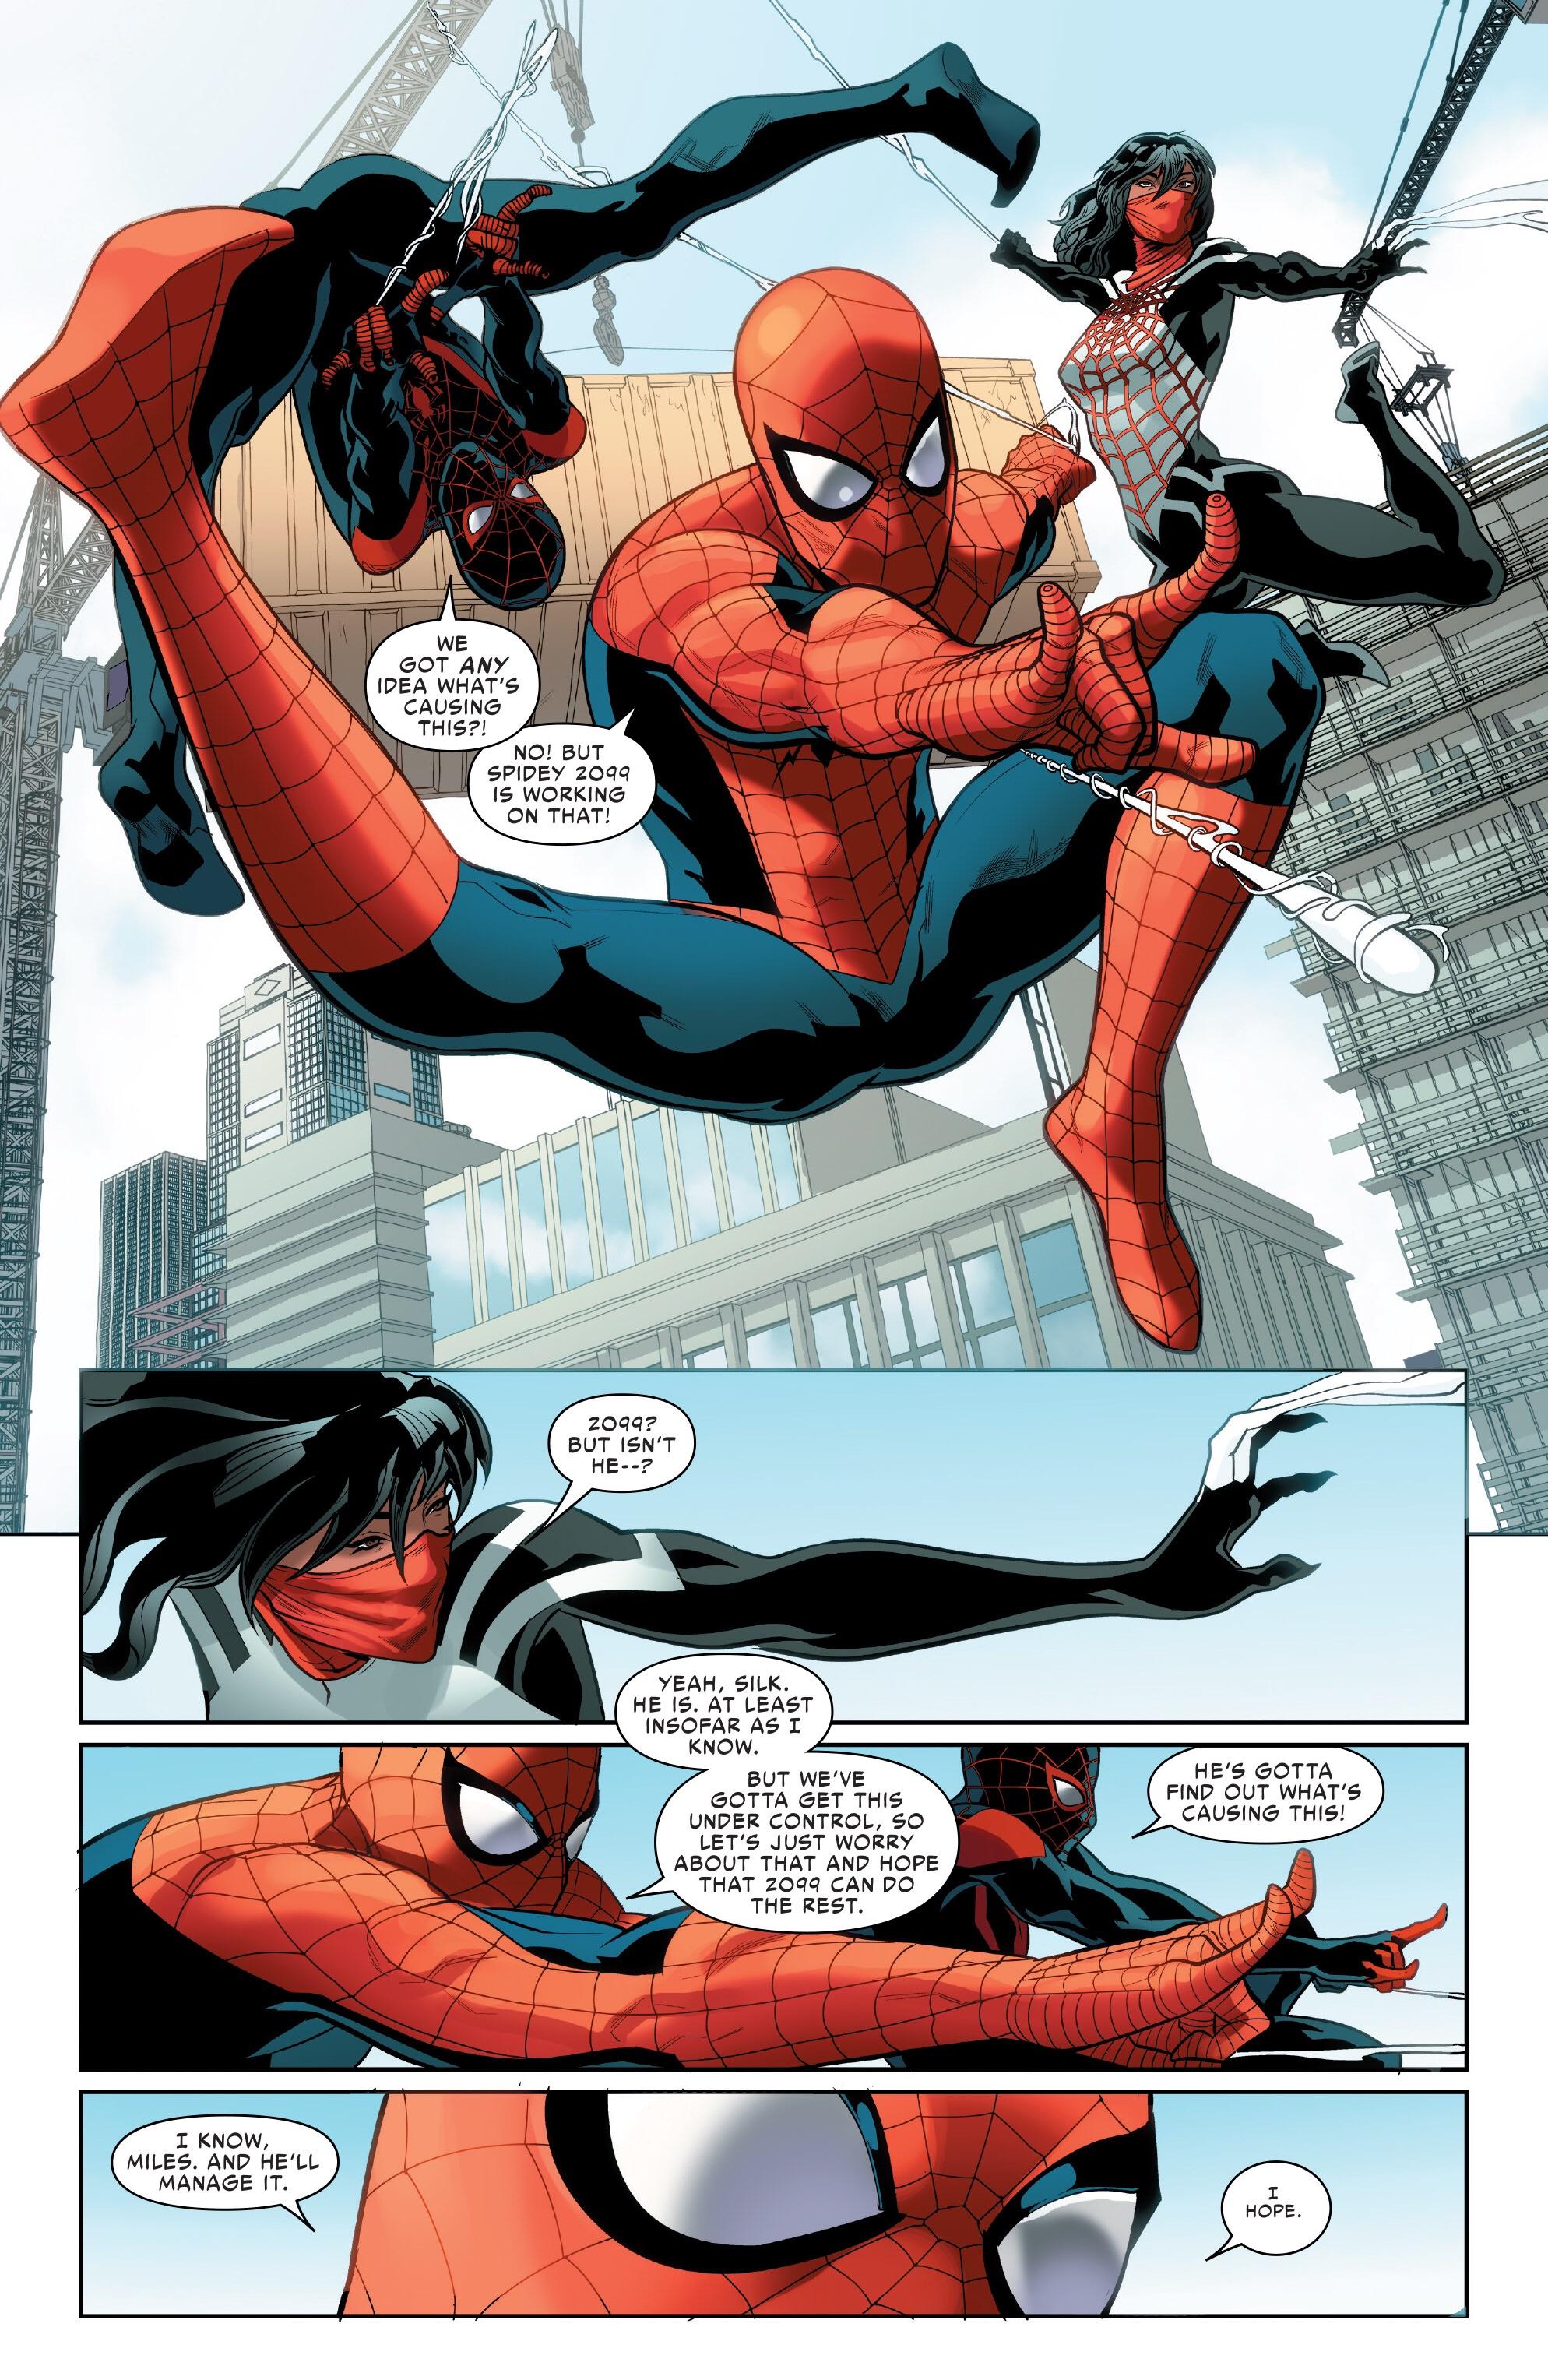 Spiderman having sex